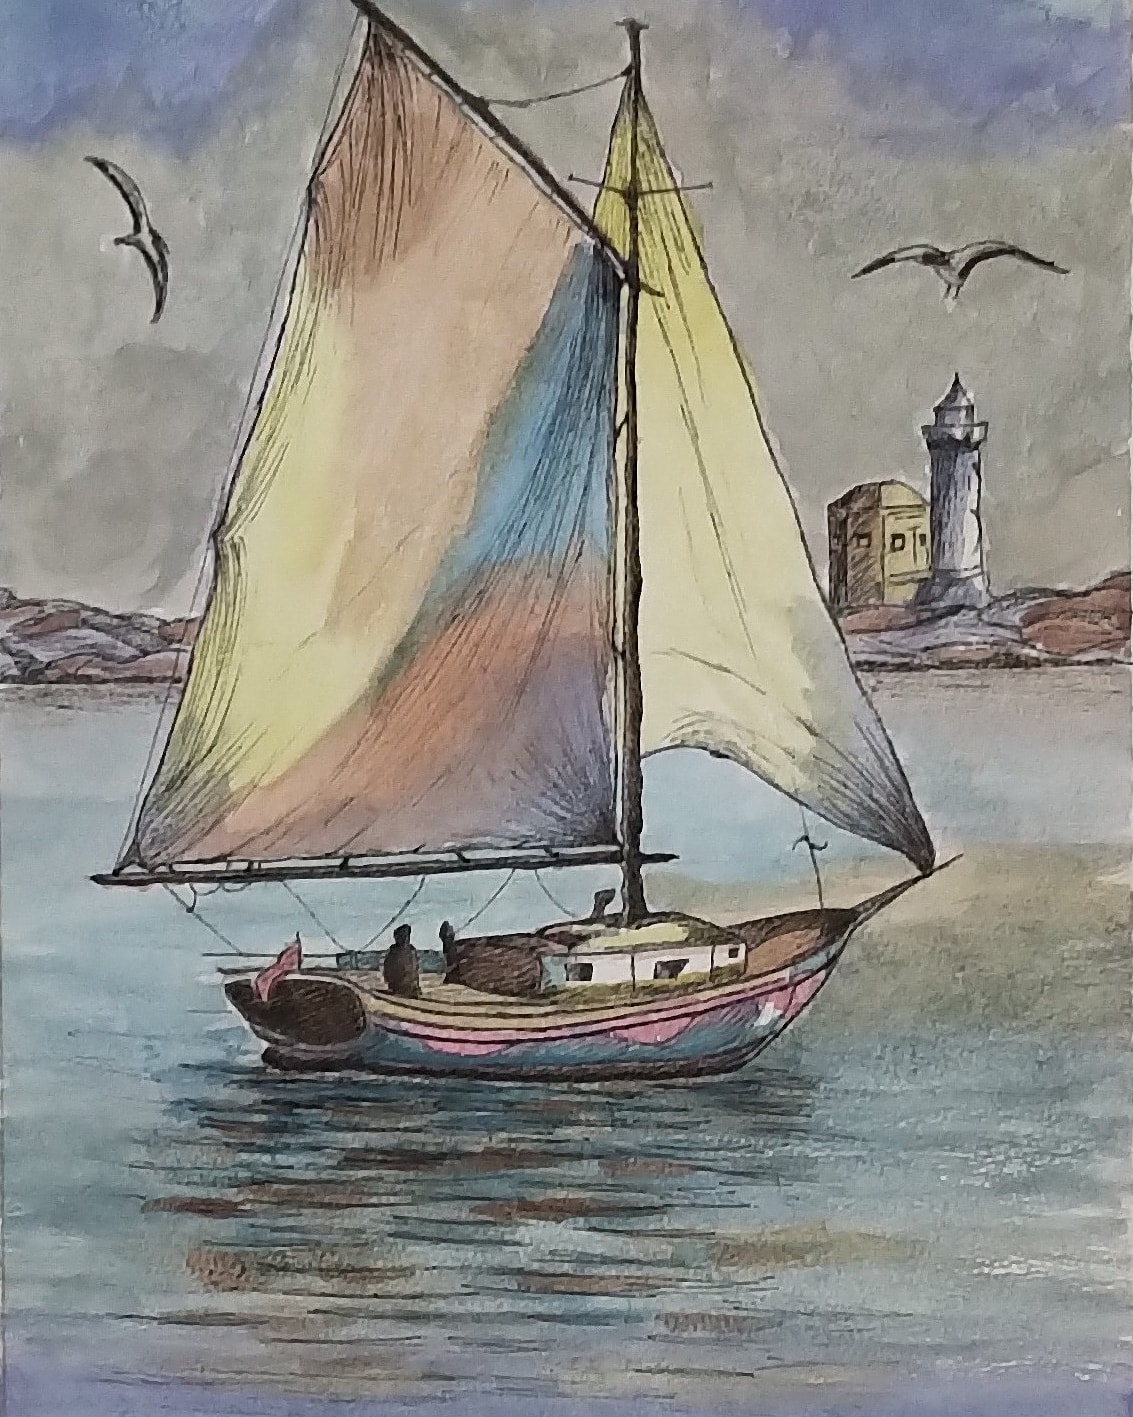 Bilal Chouman on X: Sail boat. #sketch #sketchbook #watercolor